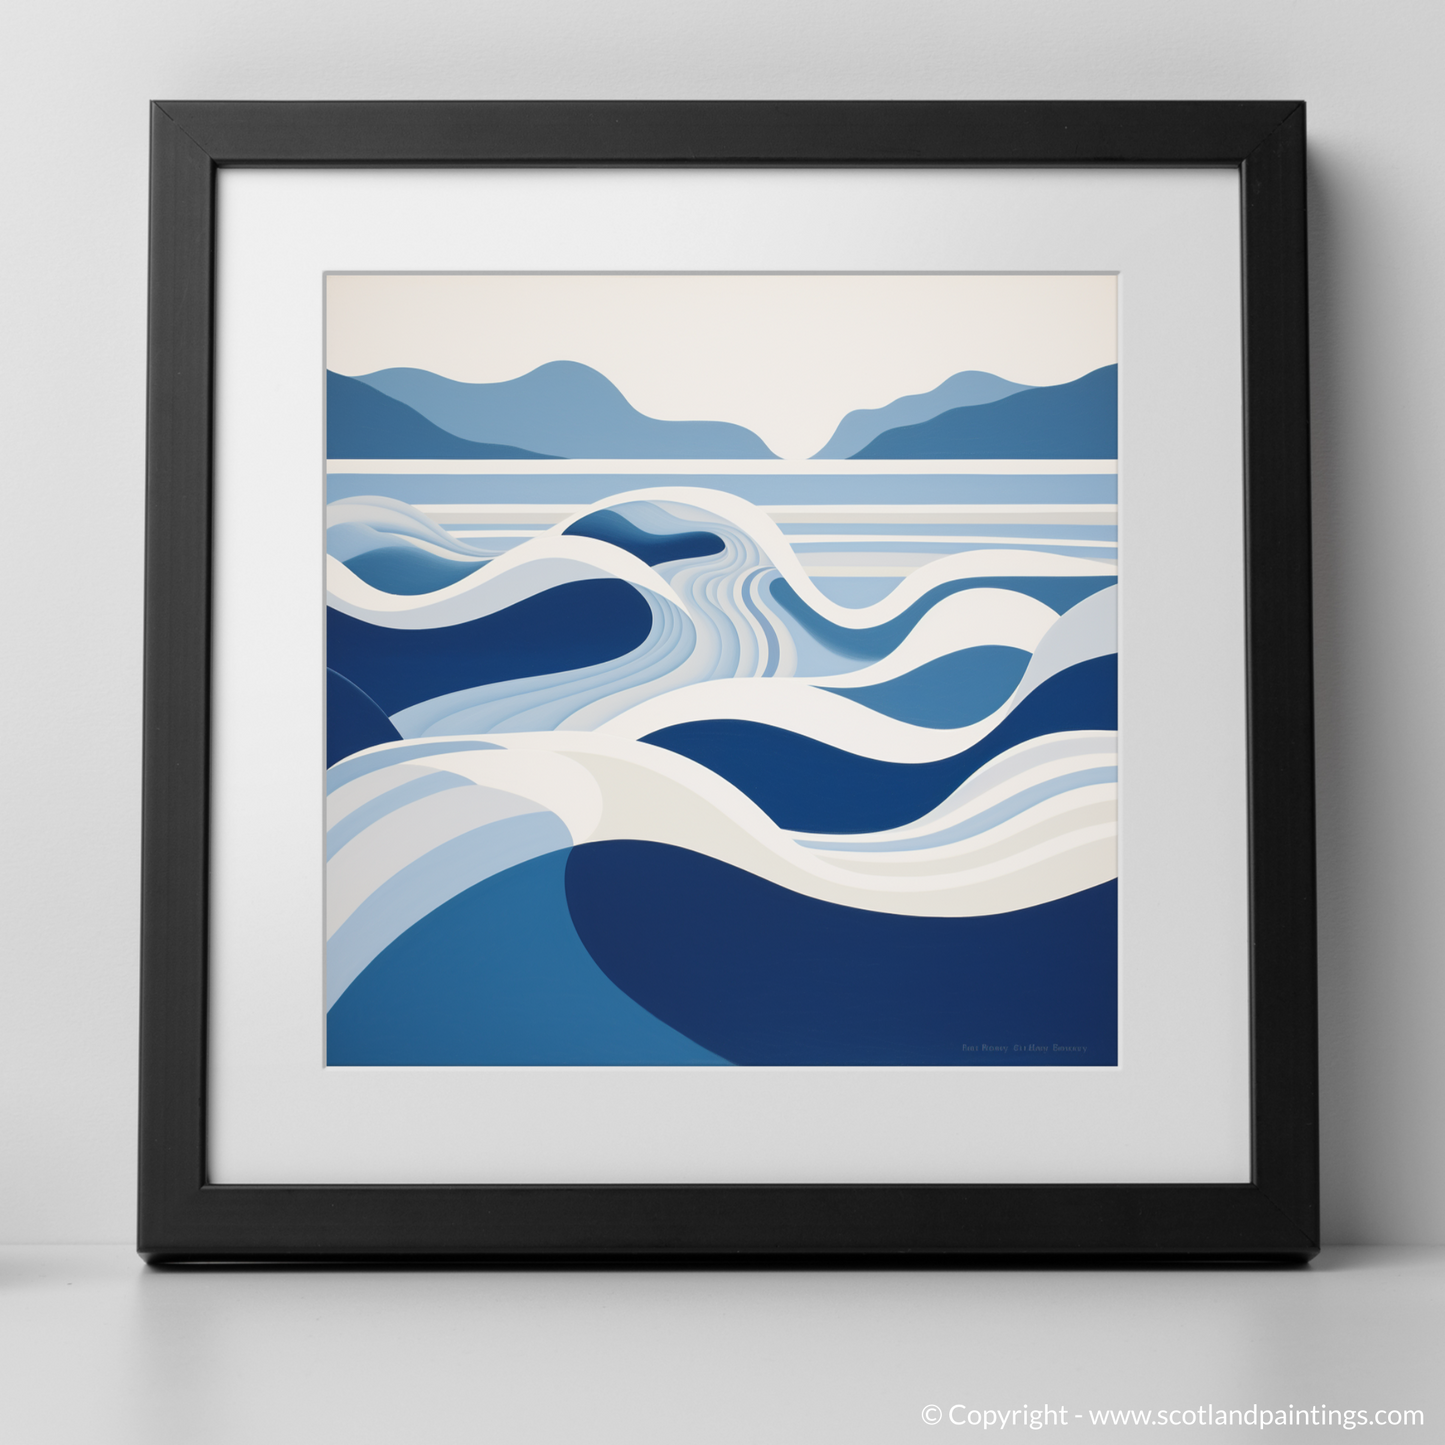 Serenade of the Scottish Seas: An Abstract Interpretation of Kiloran Bay